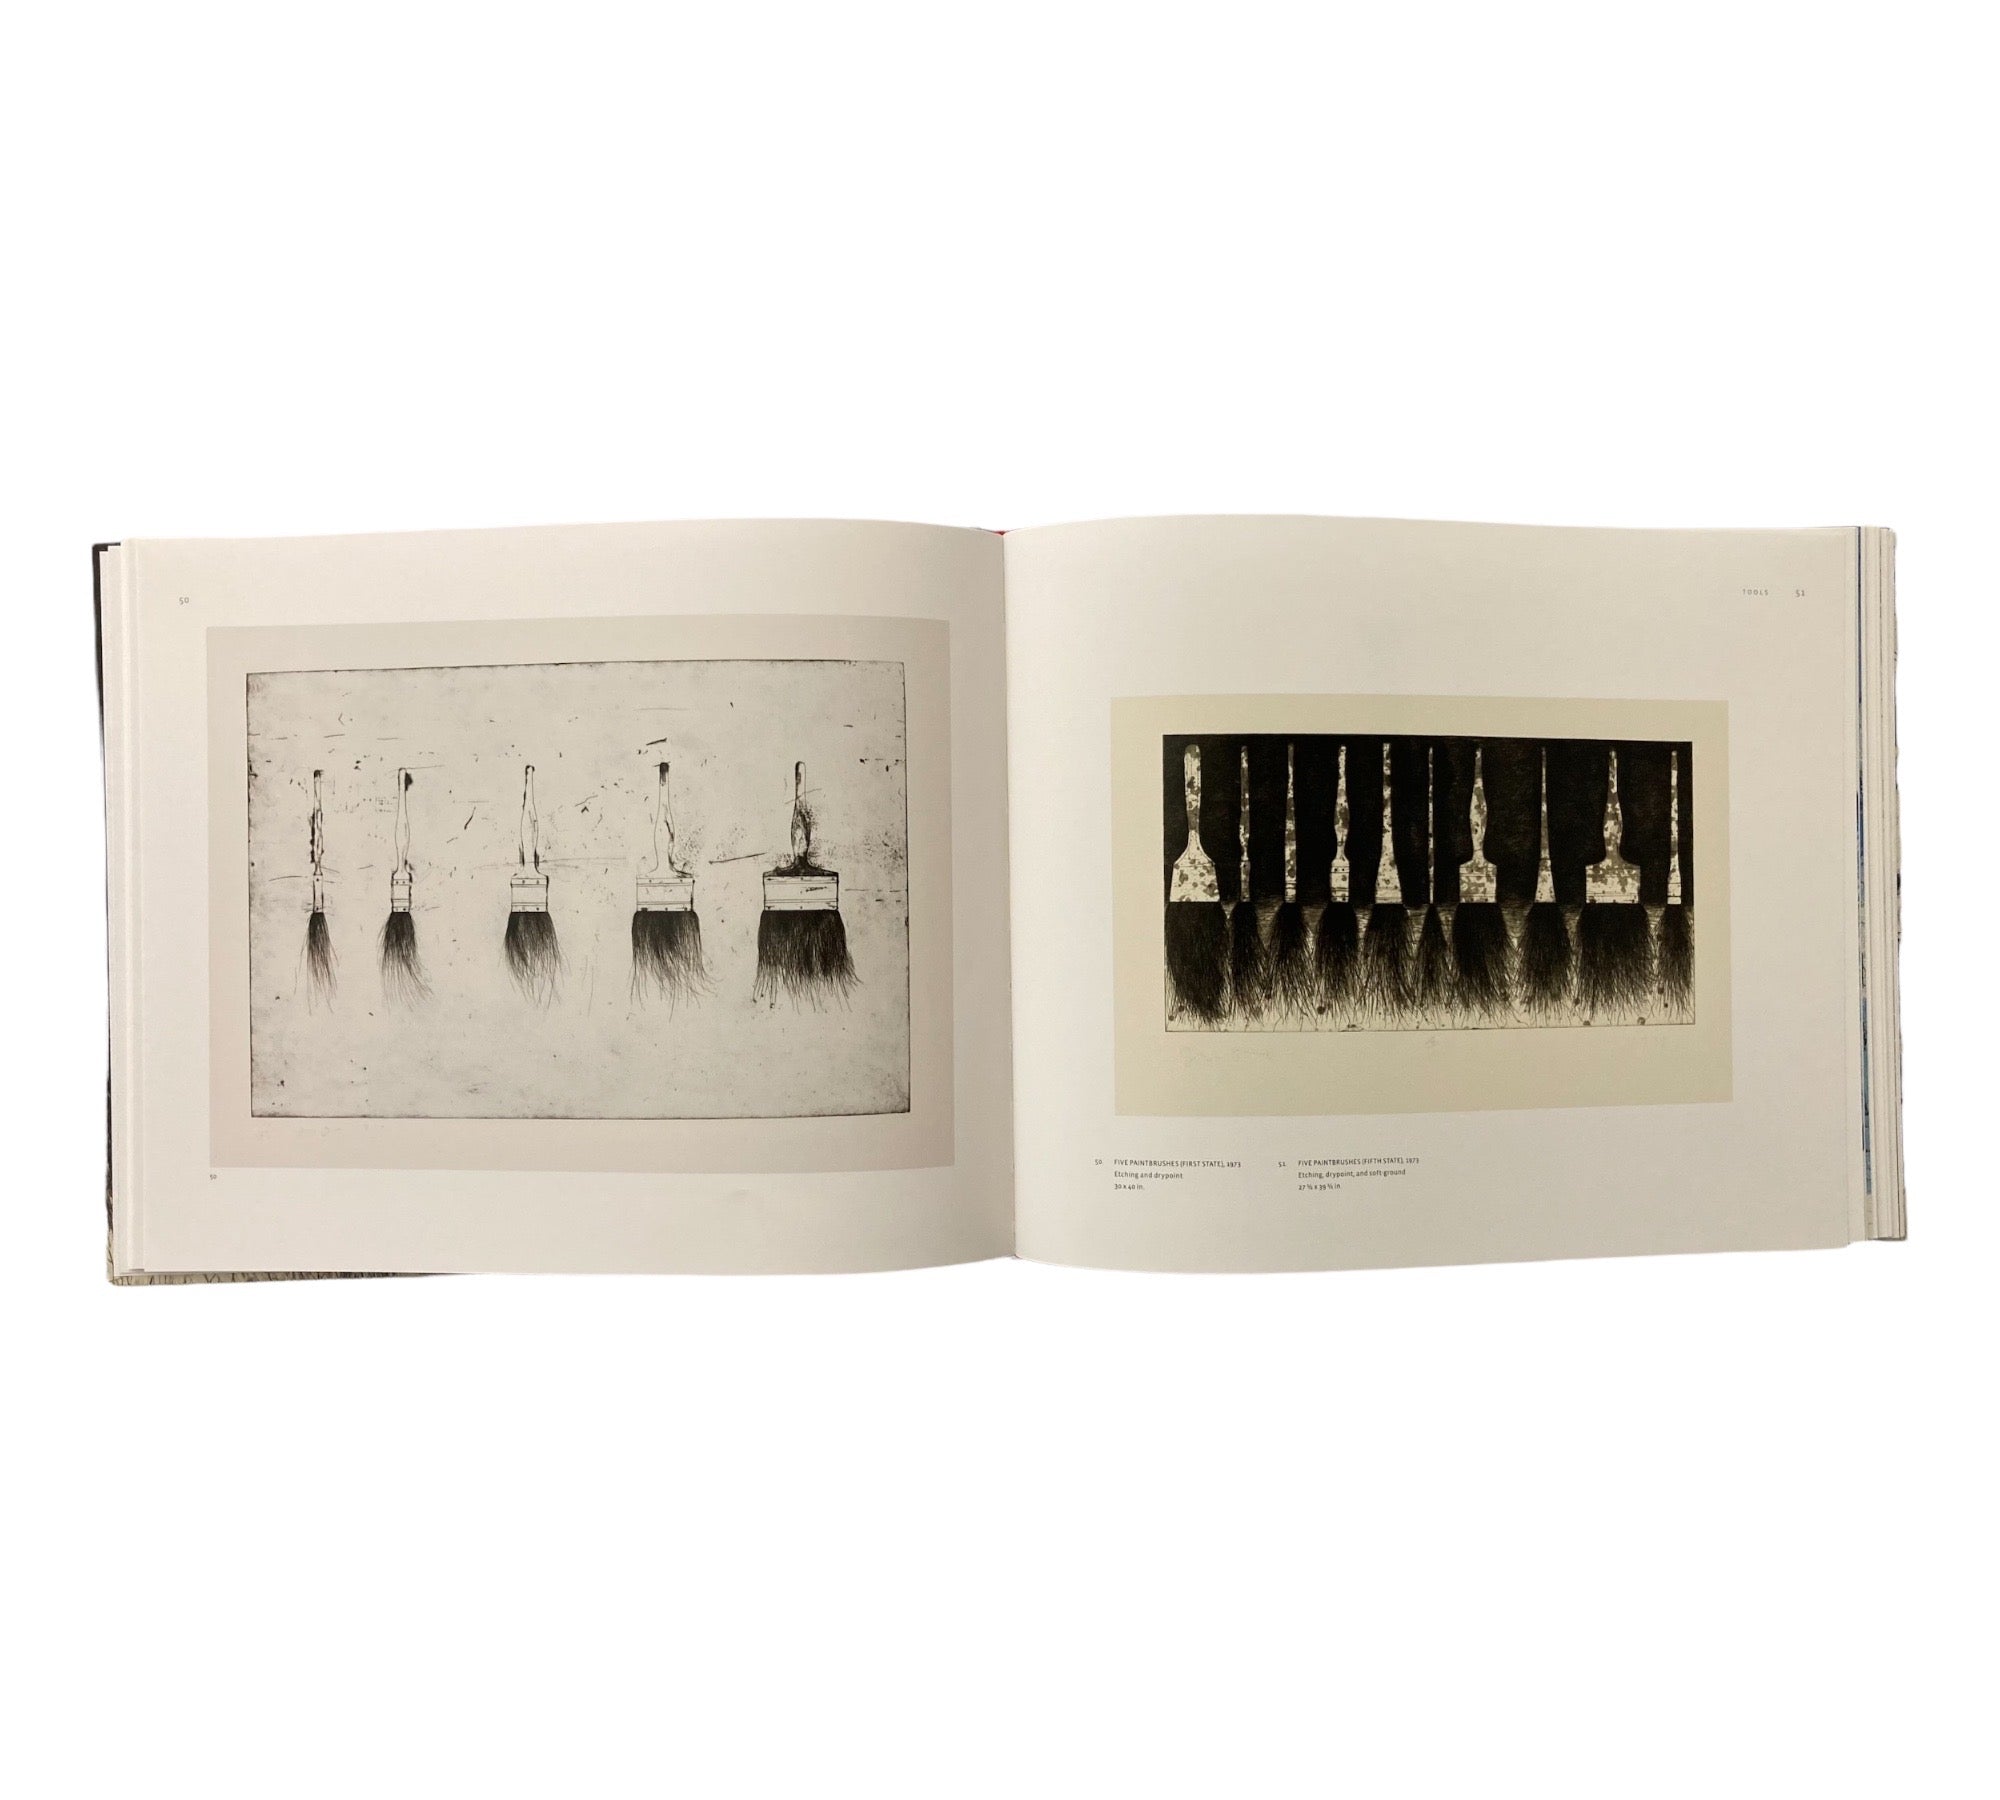 Jim Dine Printmaker: Leaving My Tracks